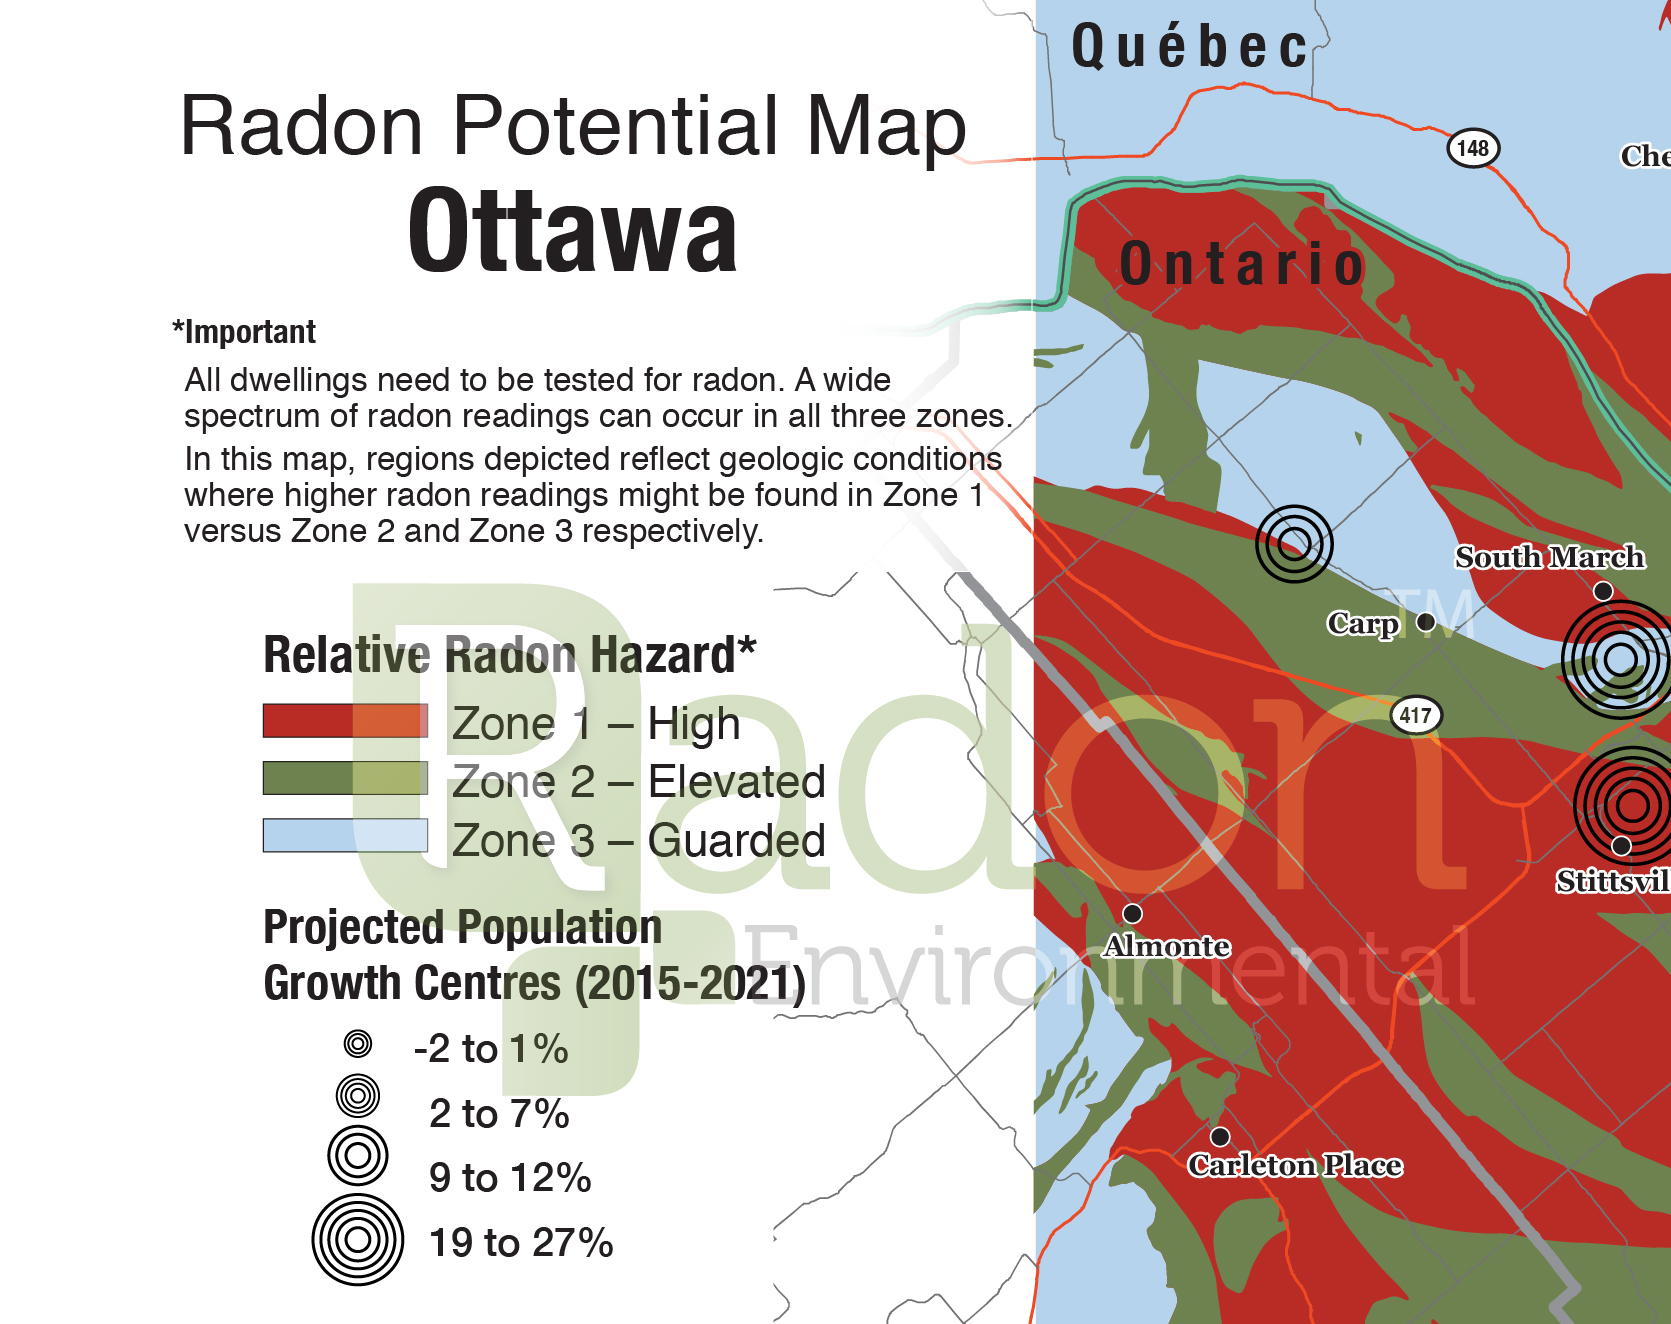 Radon Potential Map of Ottawa.